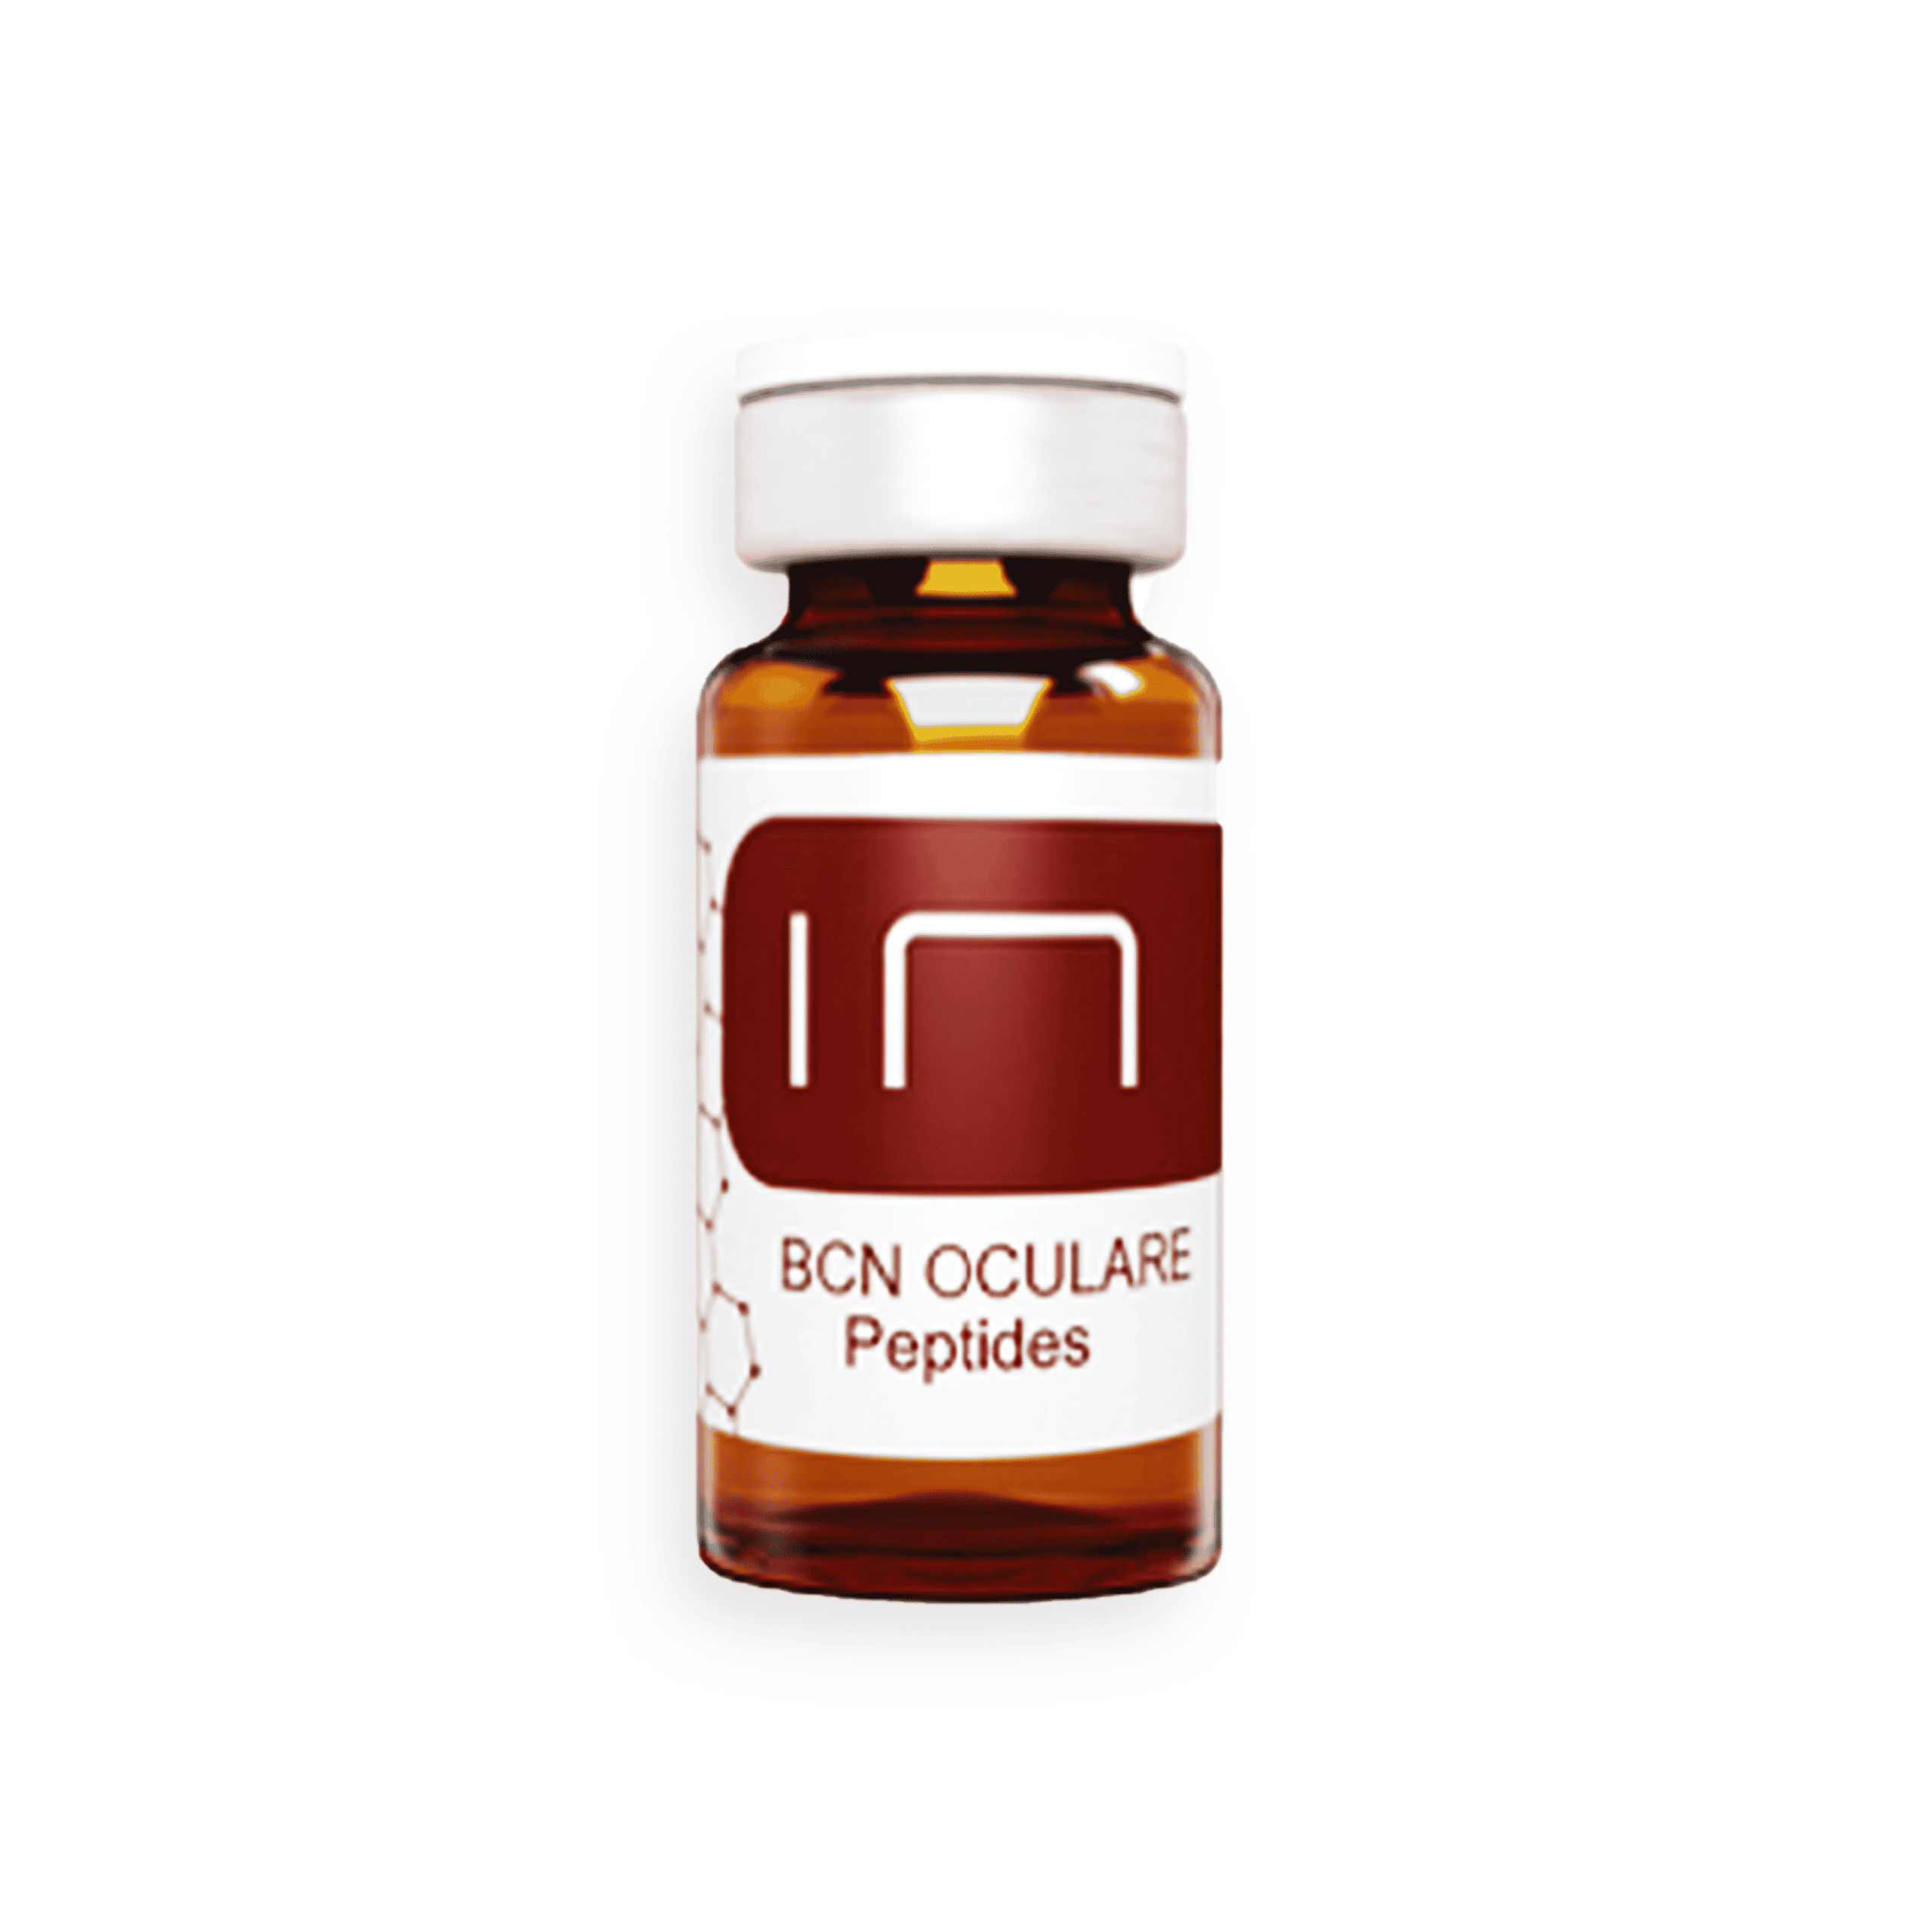 BCN OCULARE-PEPTIDES Box of 5 vials of 3 ml